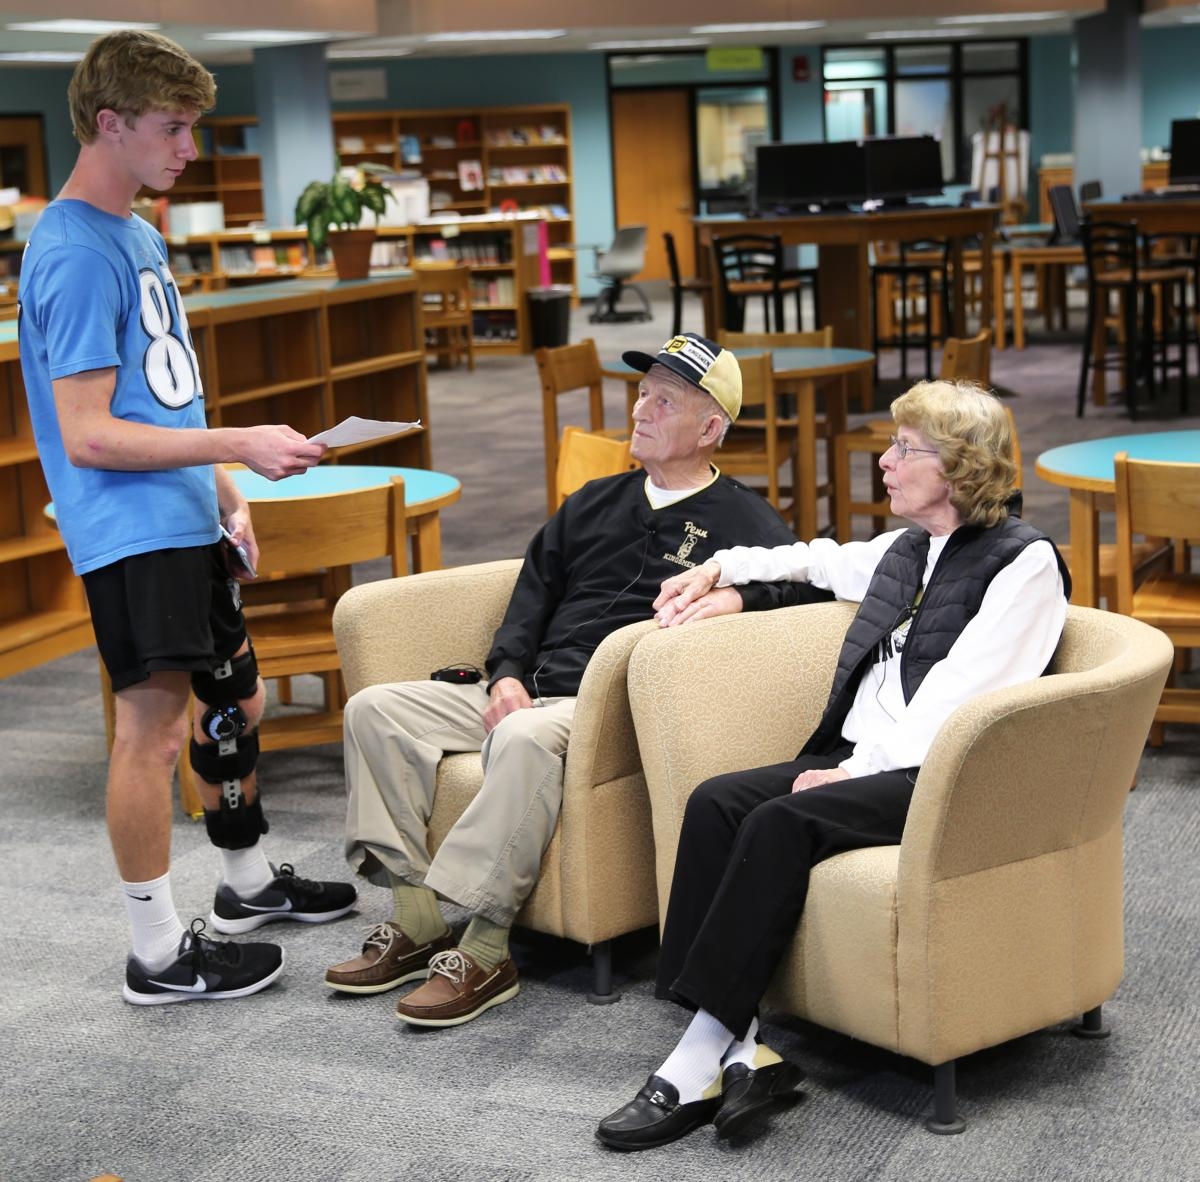 Penn student Eric Wood interviews his grandparents, Vern & Ruth Thompson